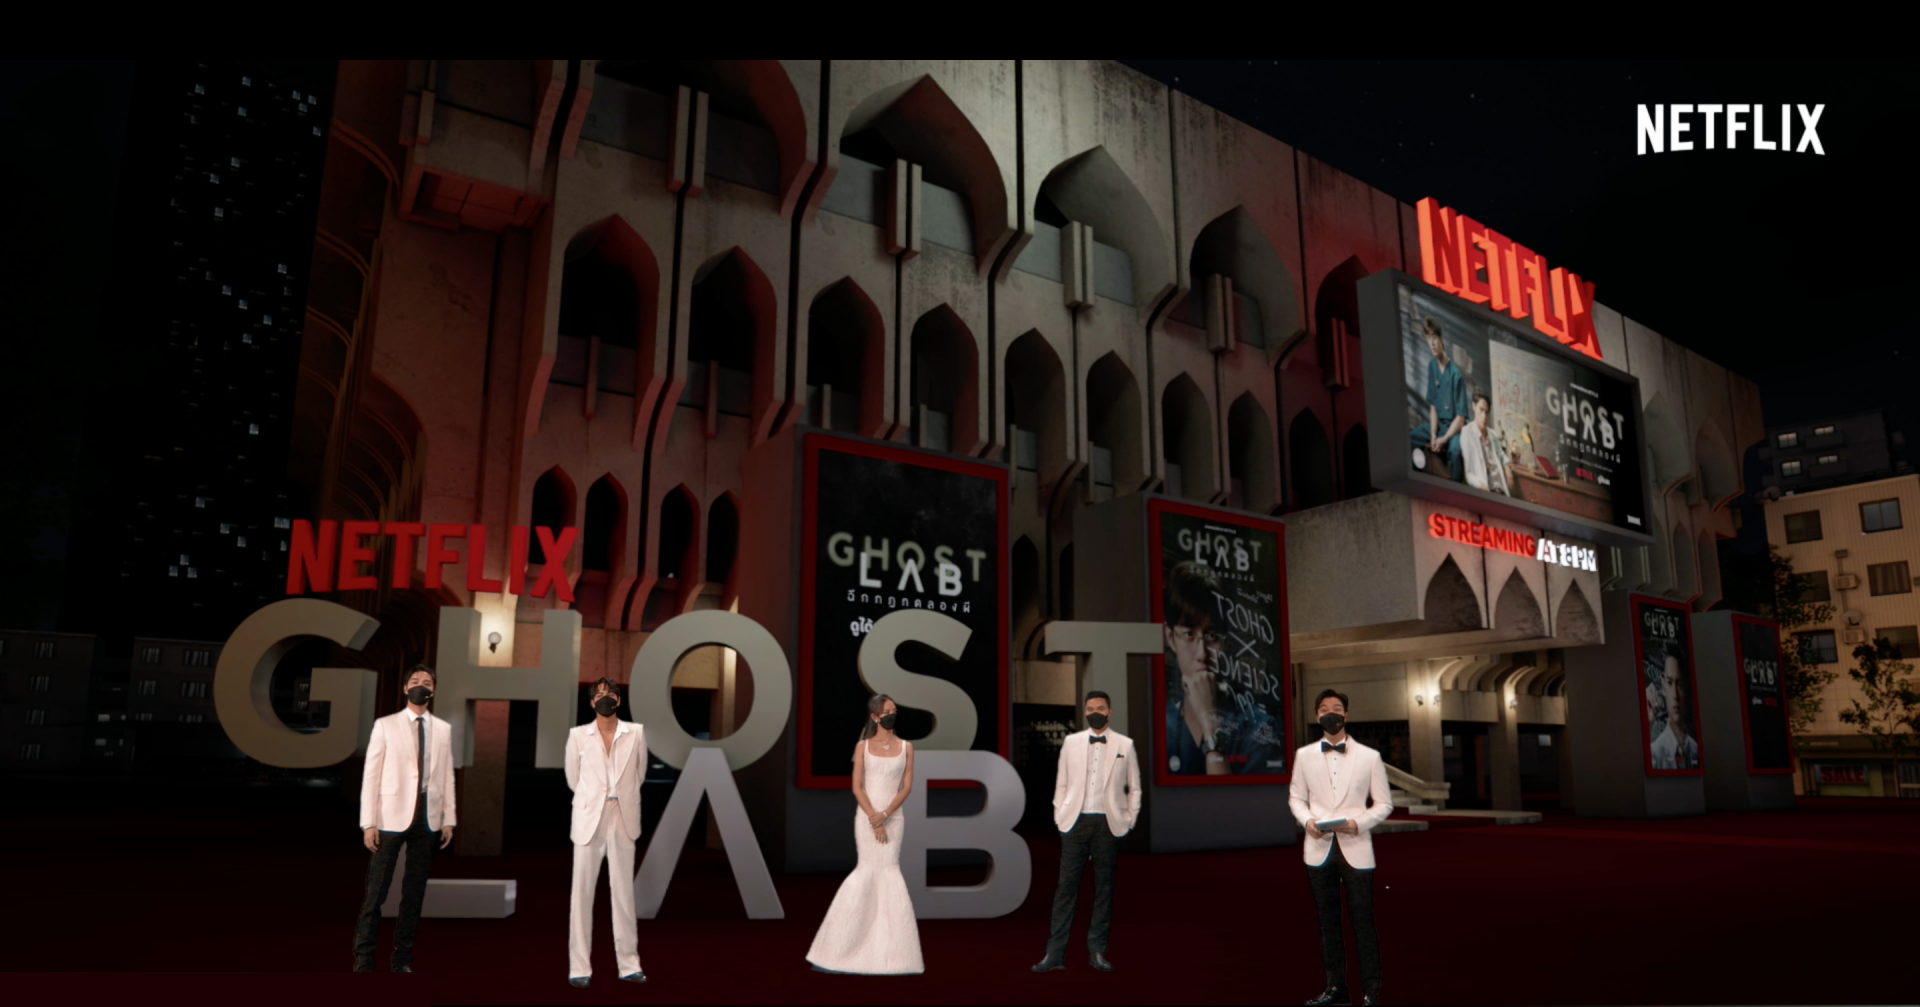 Netflix จัดงาน “GHOST LAB Virtual Premiere” เดินพรมแดงจากที่บ้าน รับมาตรการ Social Distancing